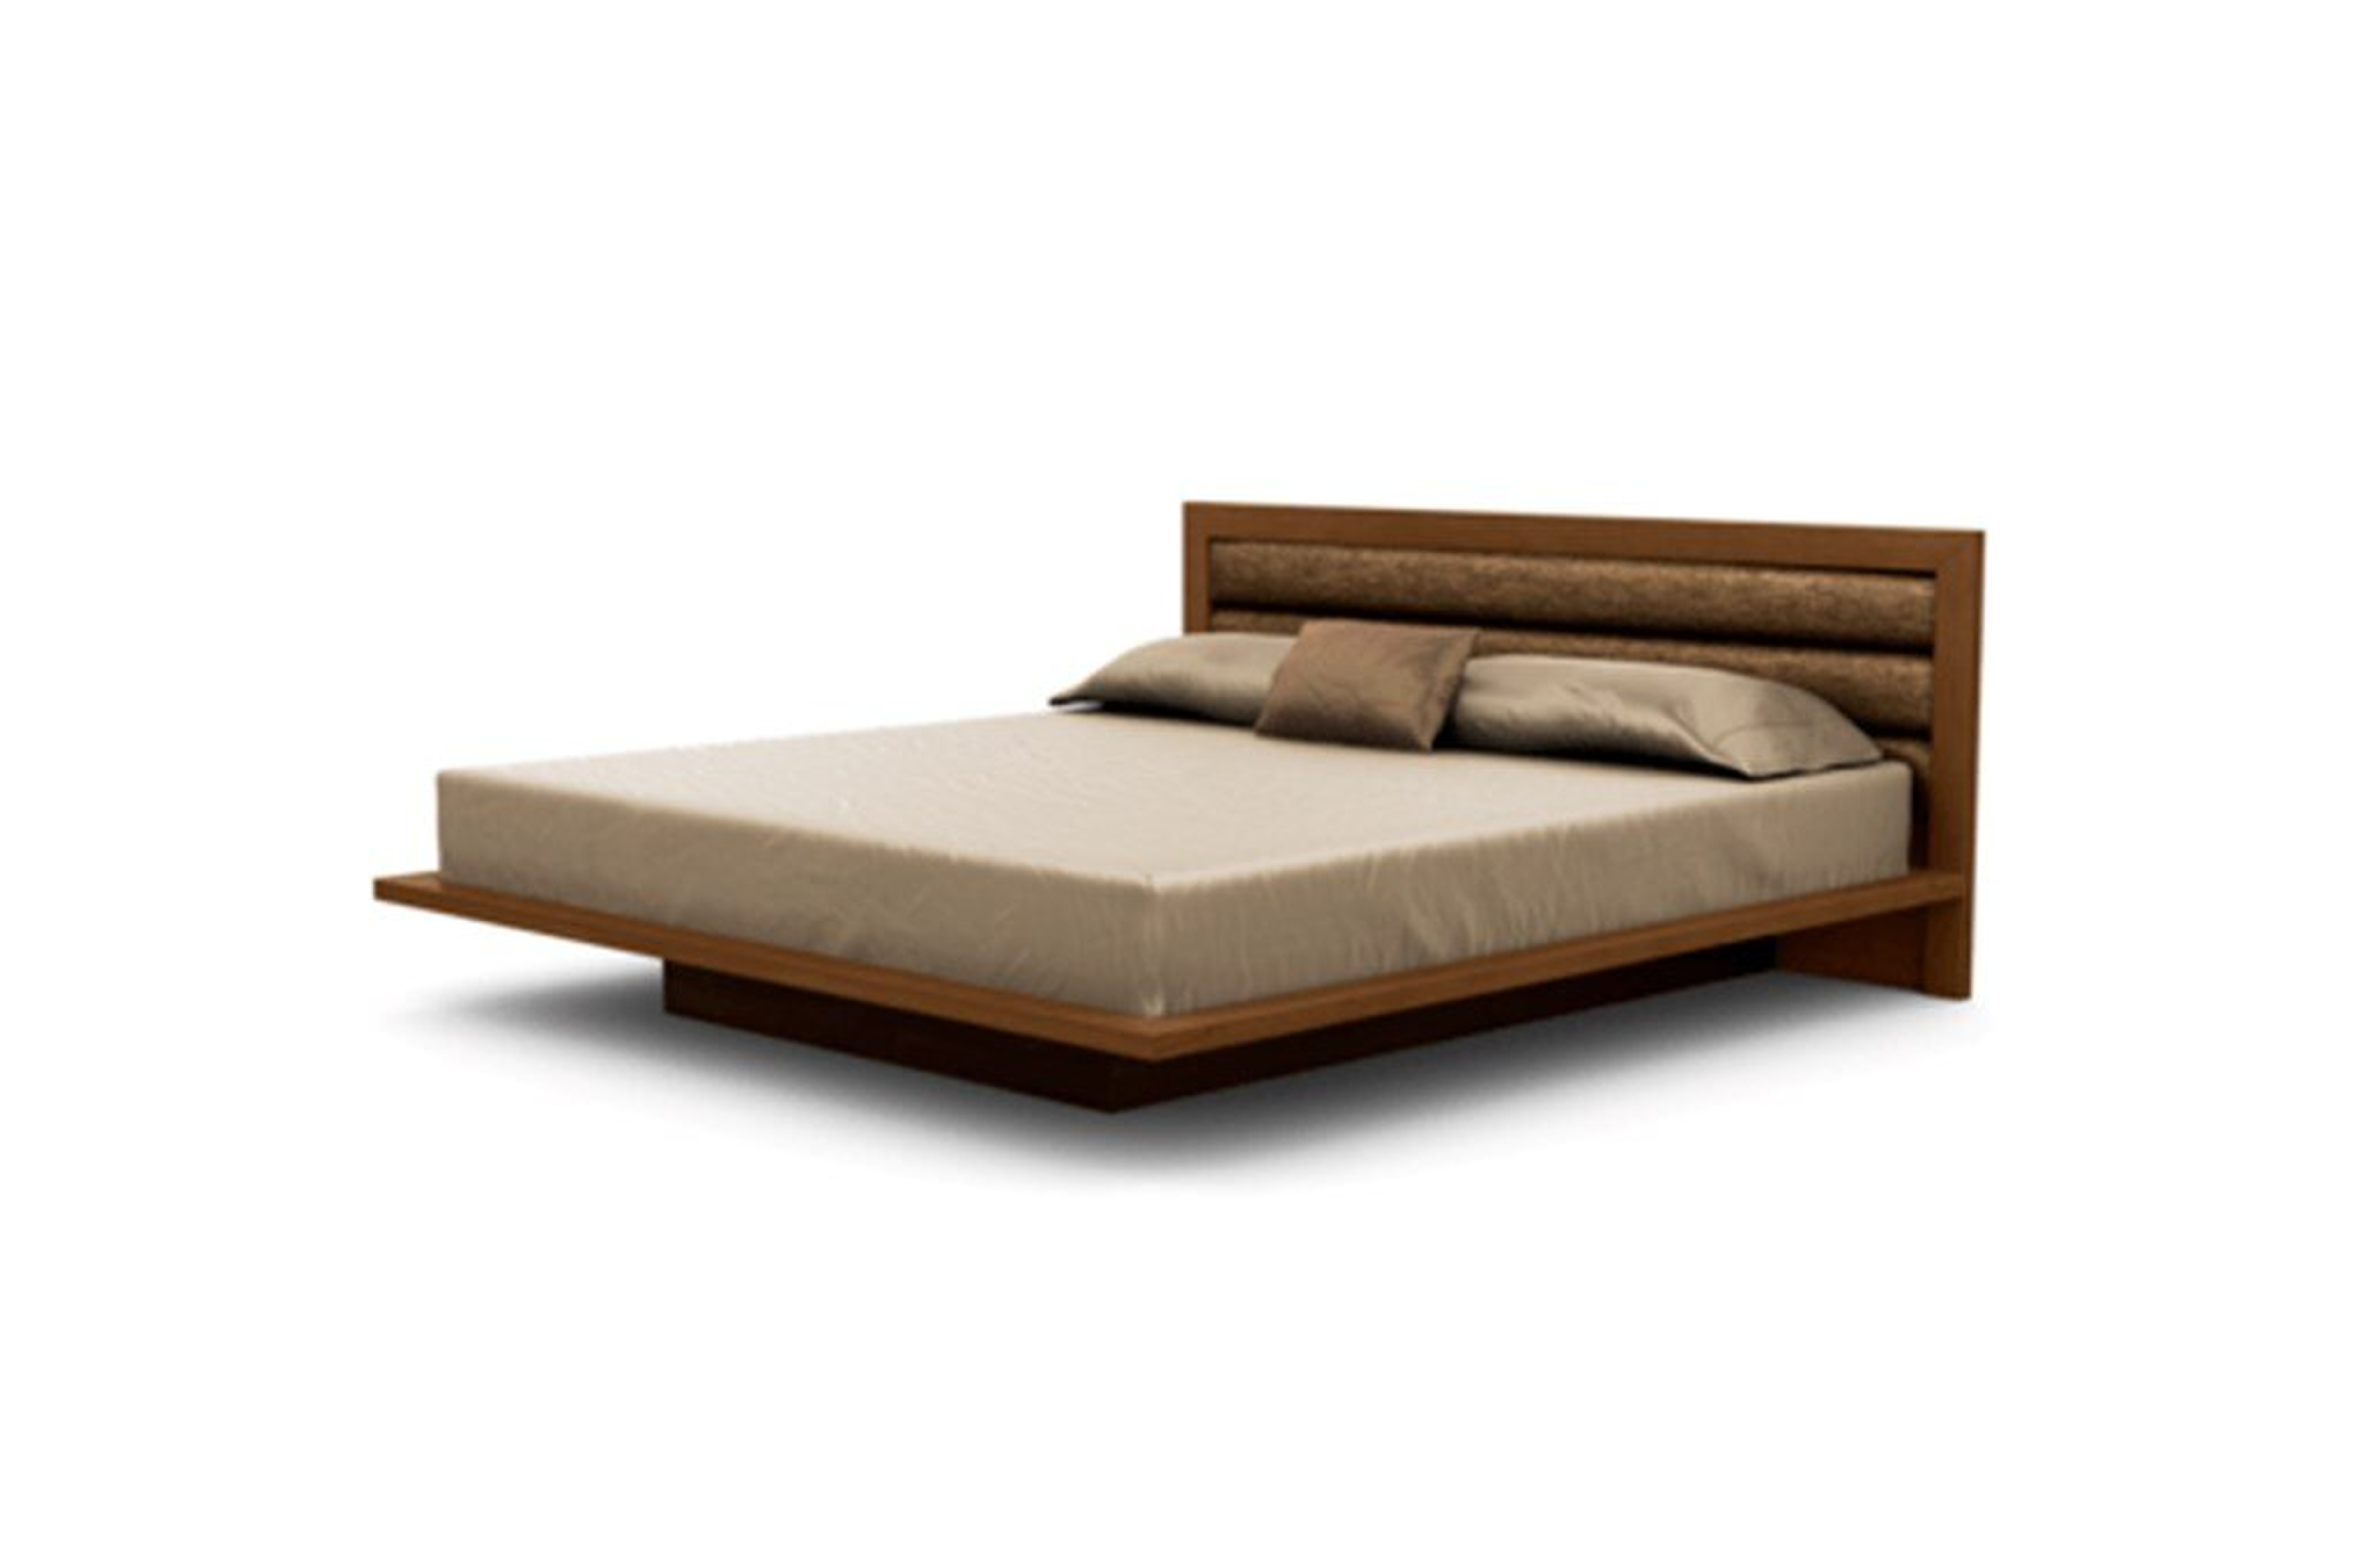 "Copeland Furniture Solid Wood and Upholstered Platform Bed" - Perigold